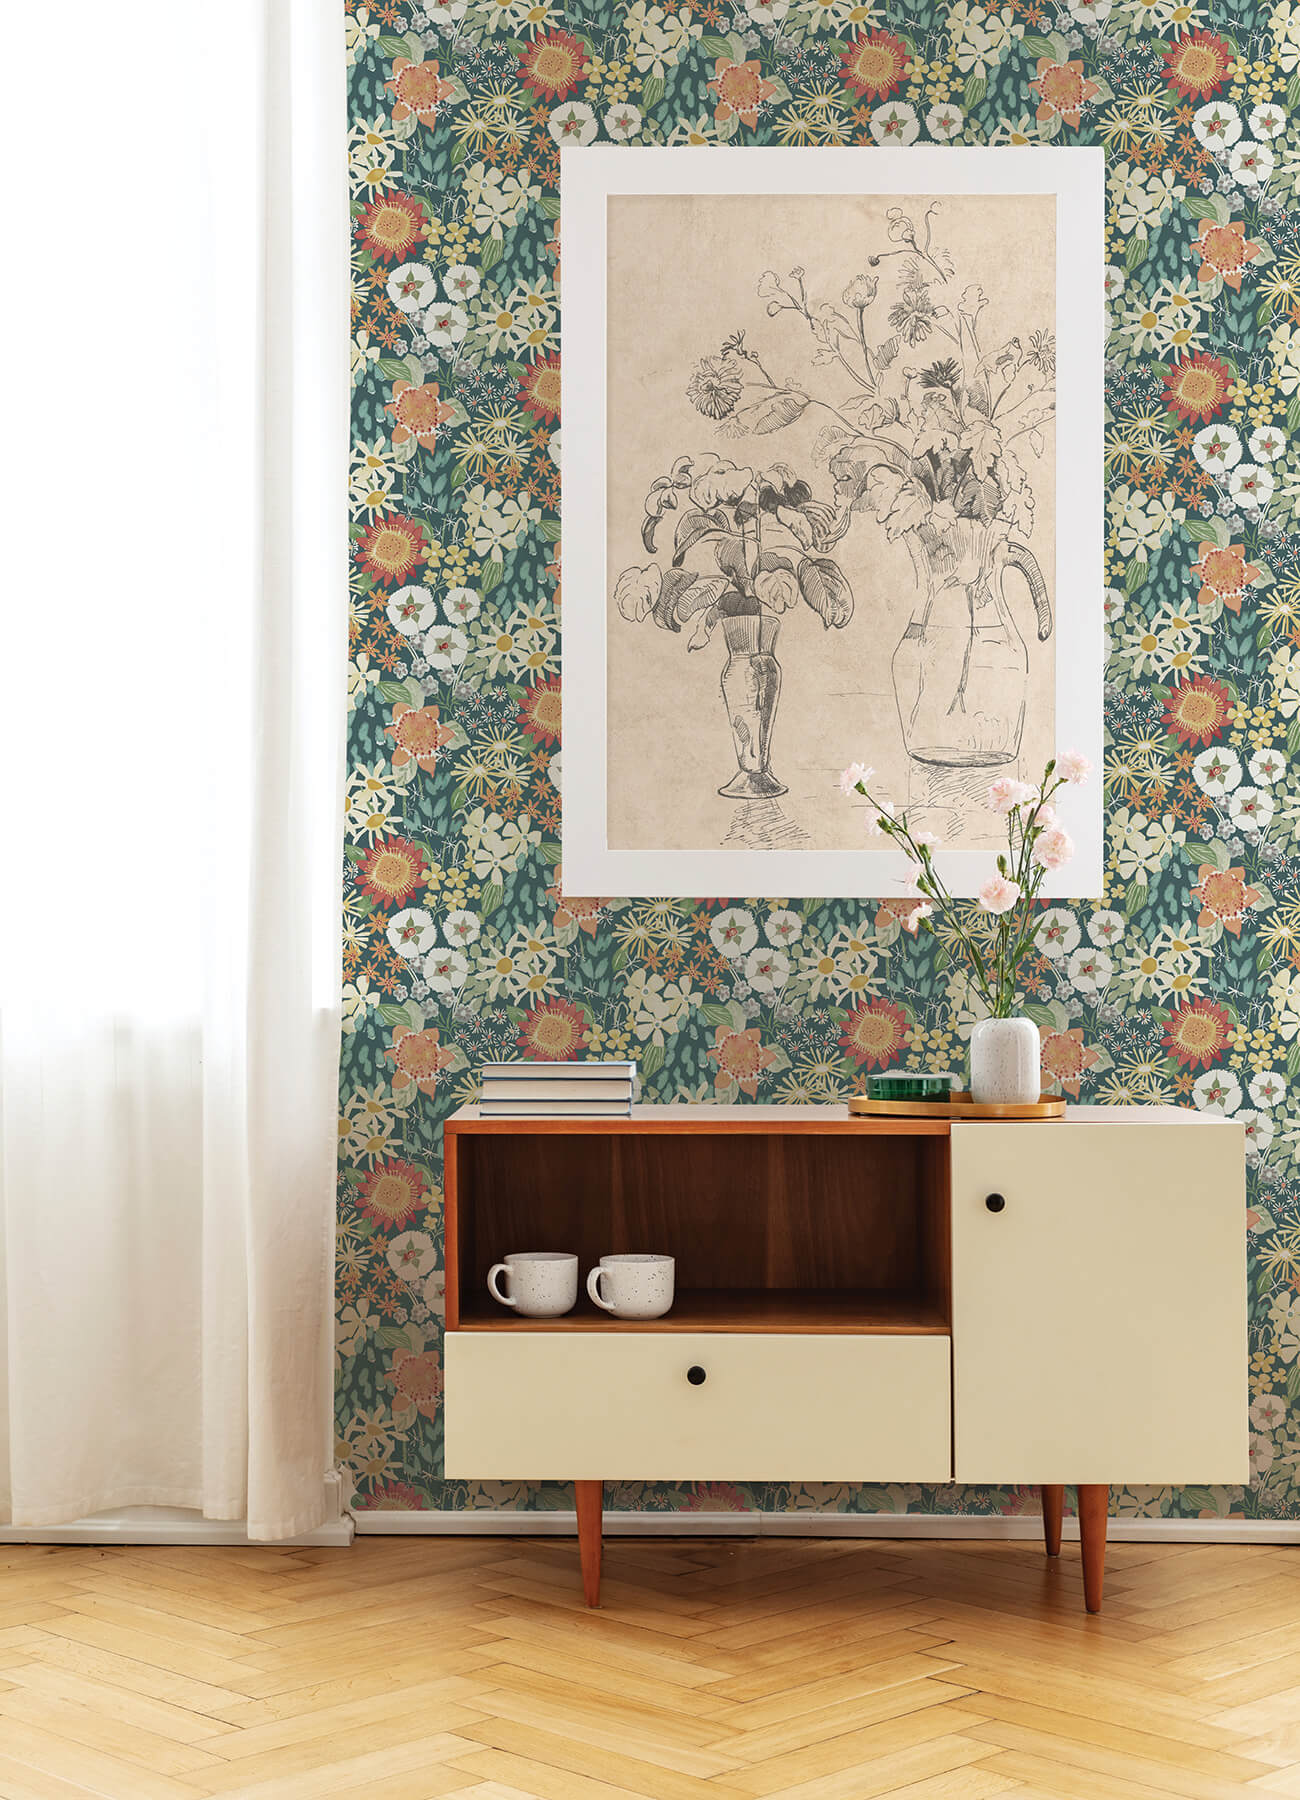 Hannah Karina Wildflower Garden Wallpaper - Teal